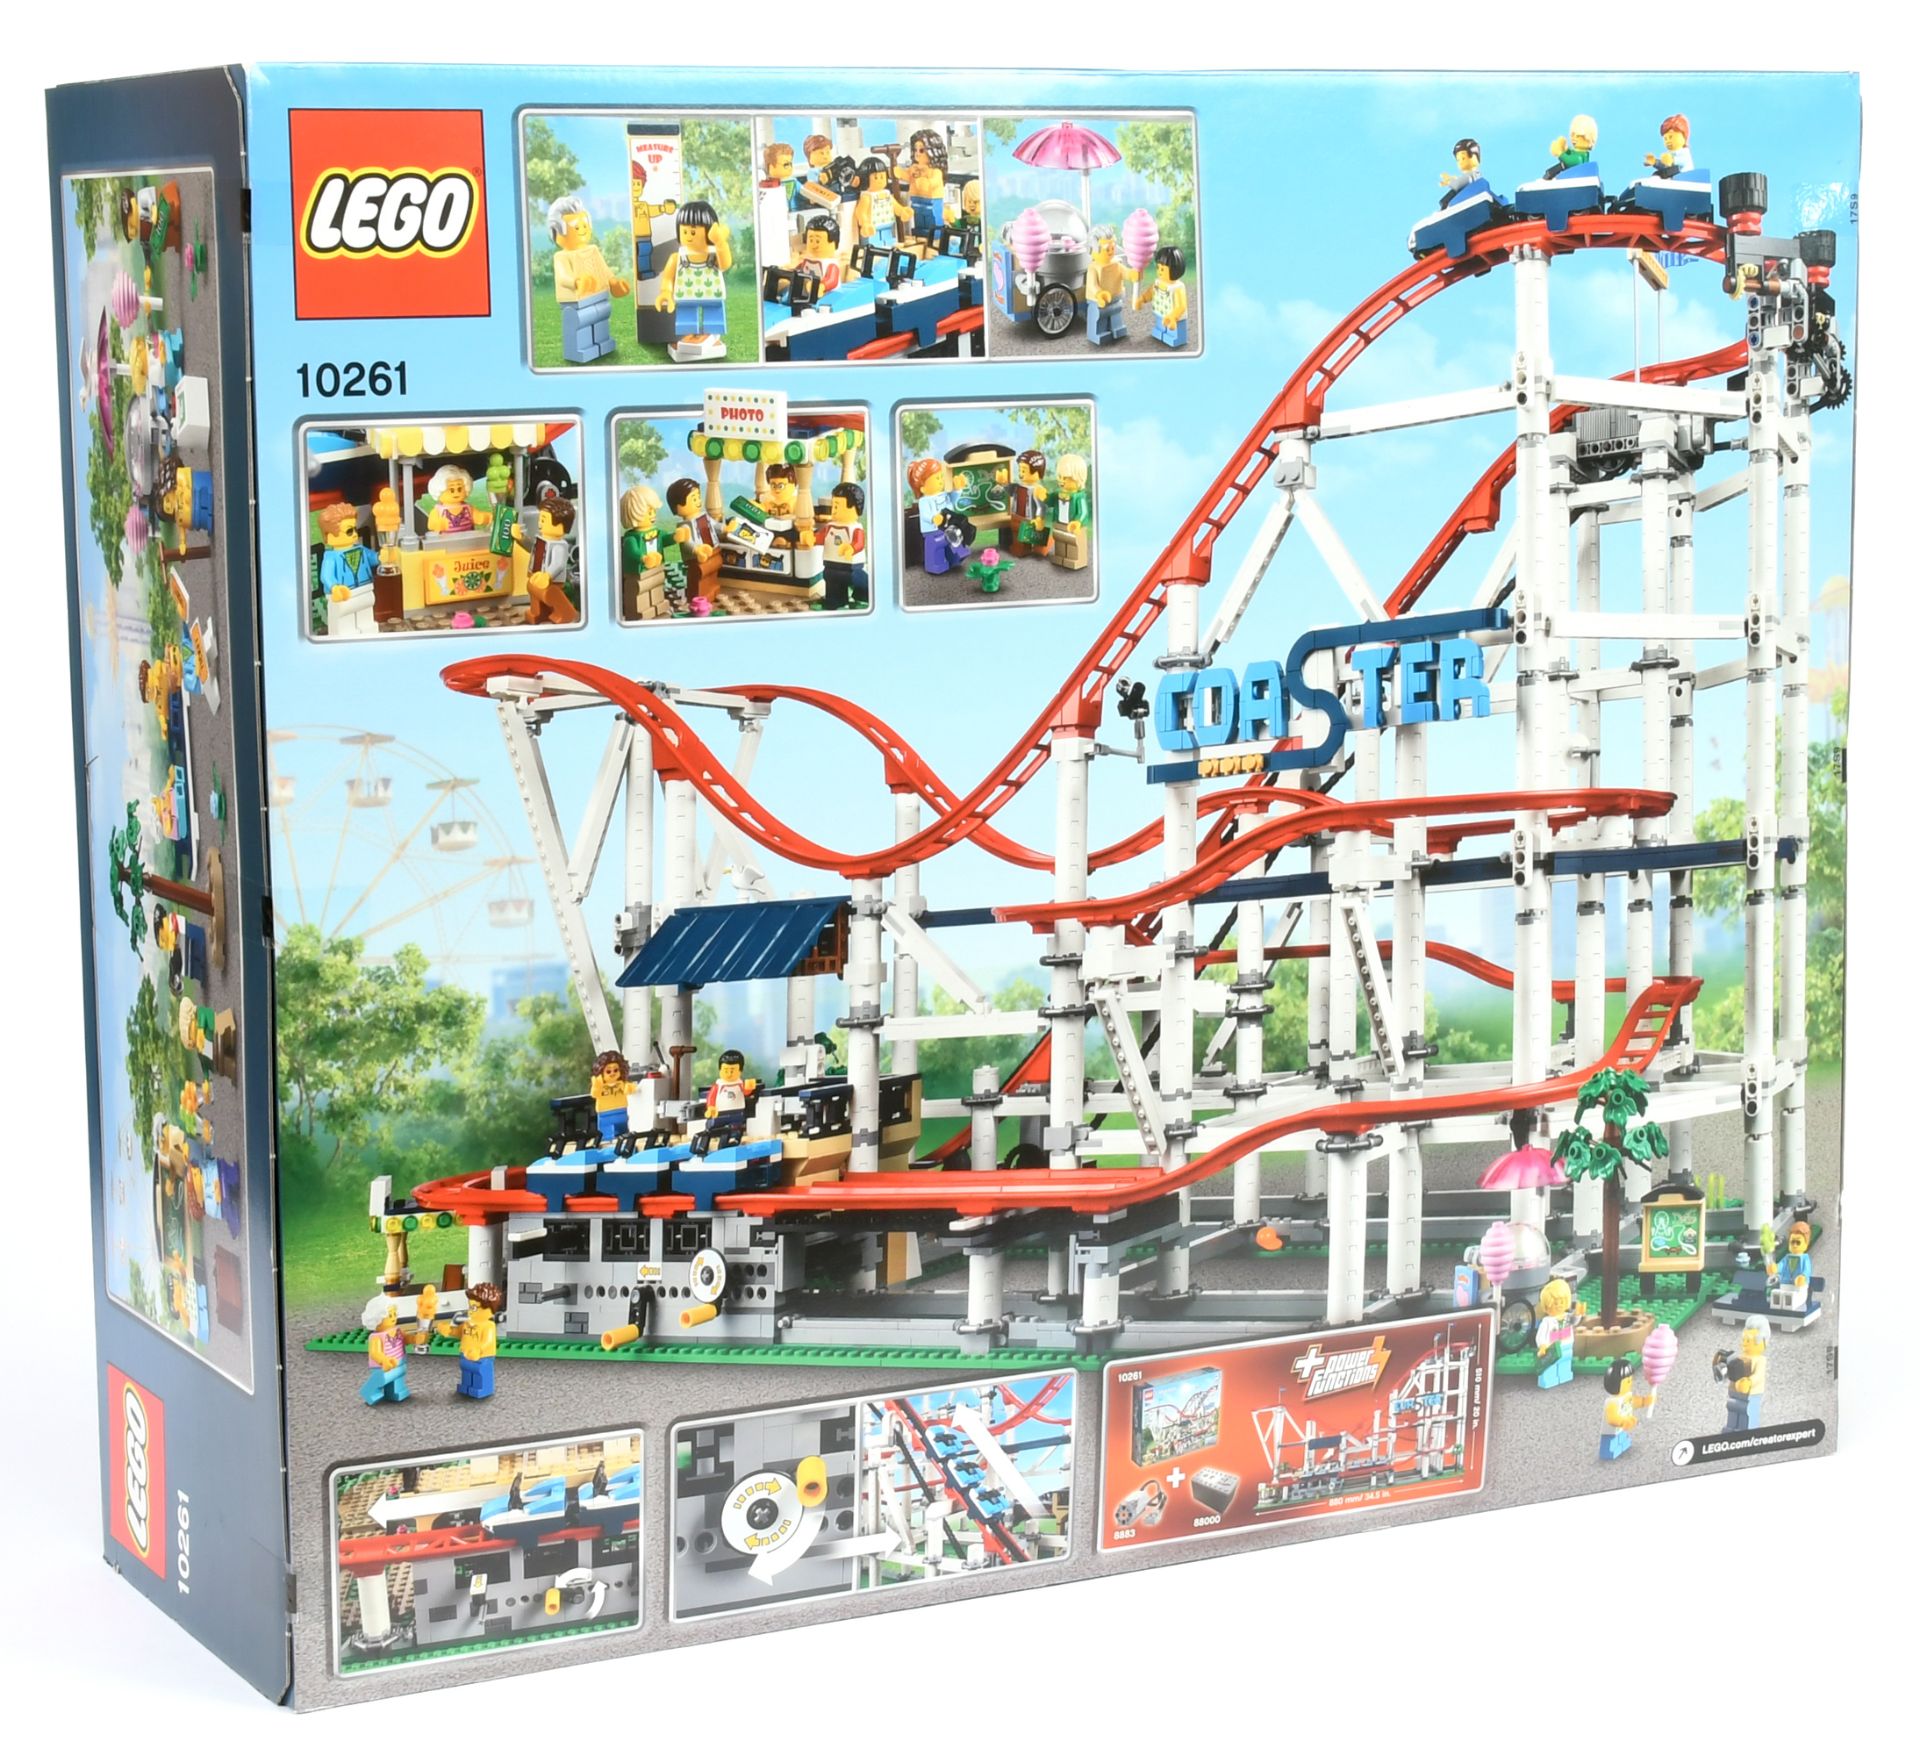 Lego 10261 Creator - Roller Coaster, within Near Mint sealed box. - Image 2 of 2